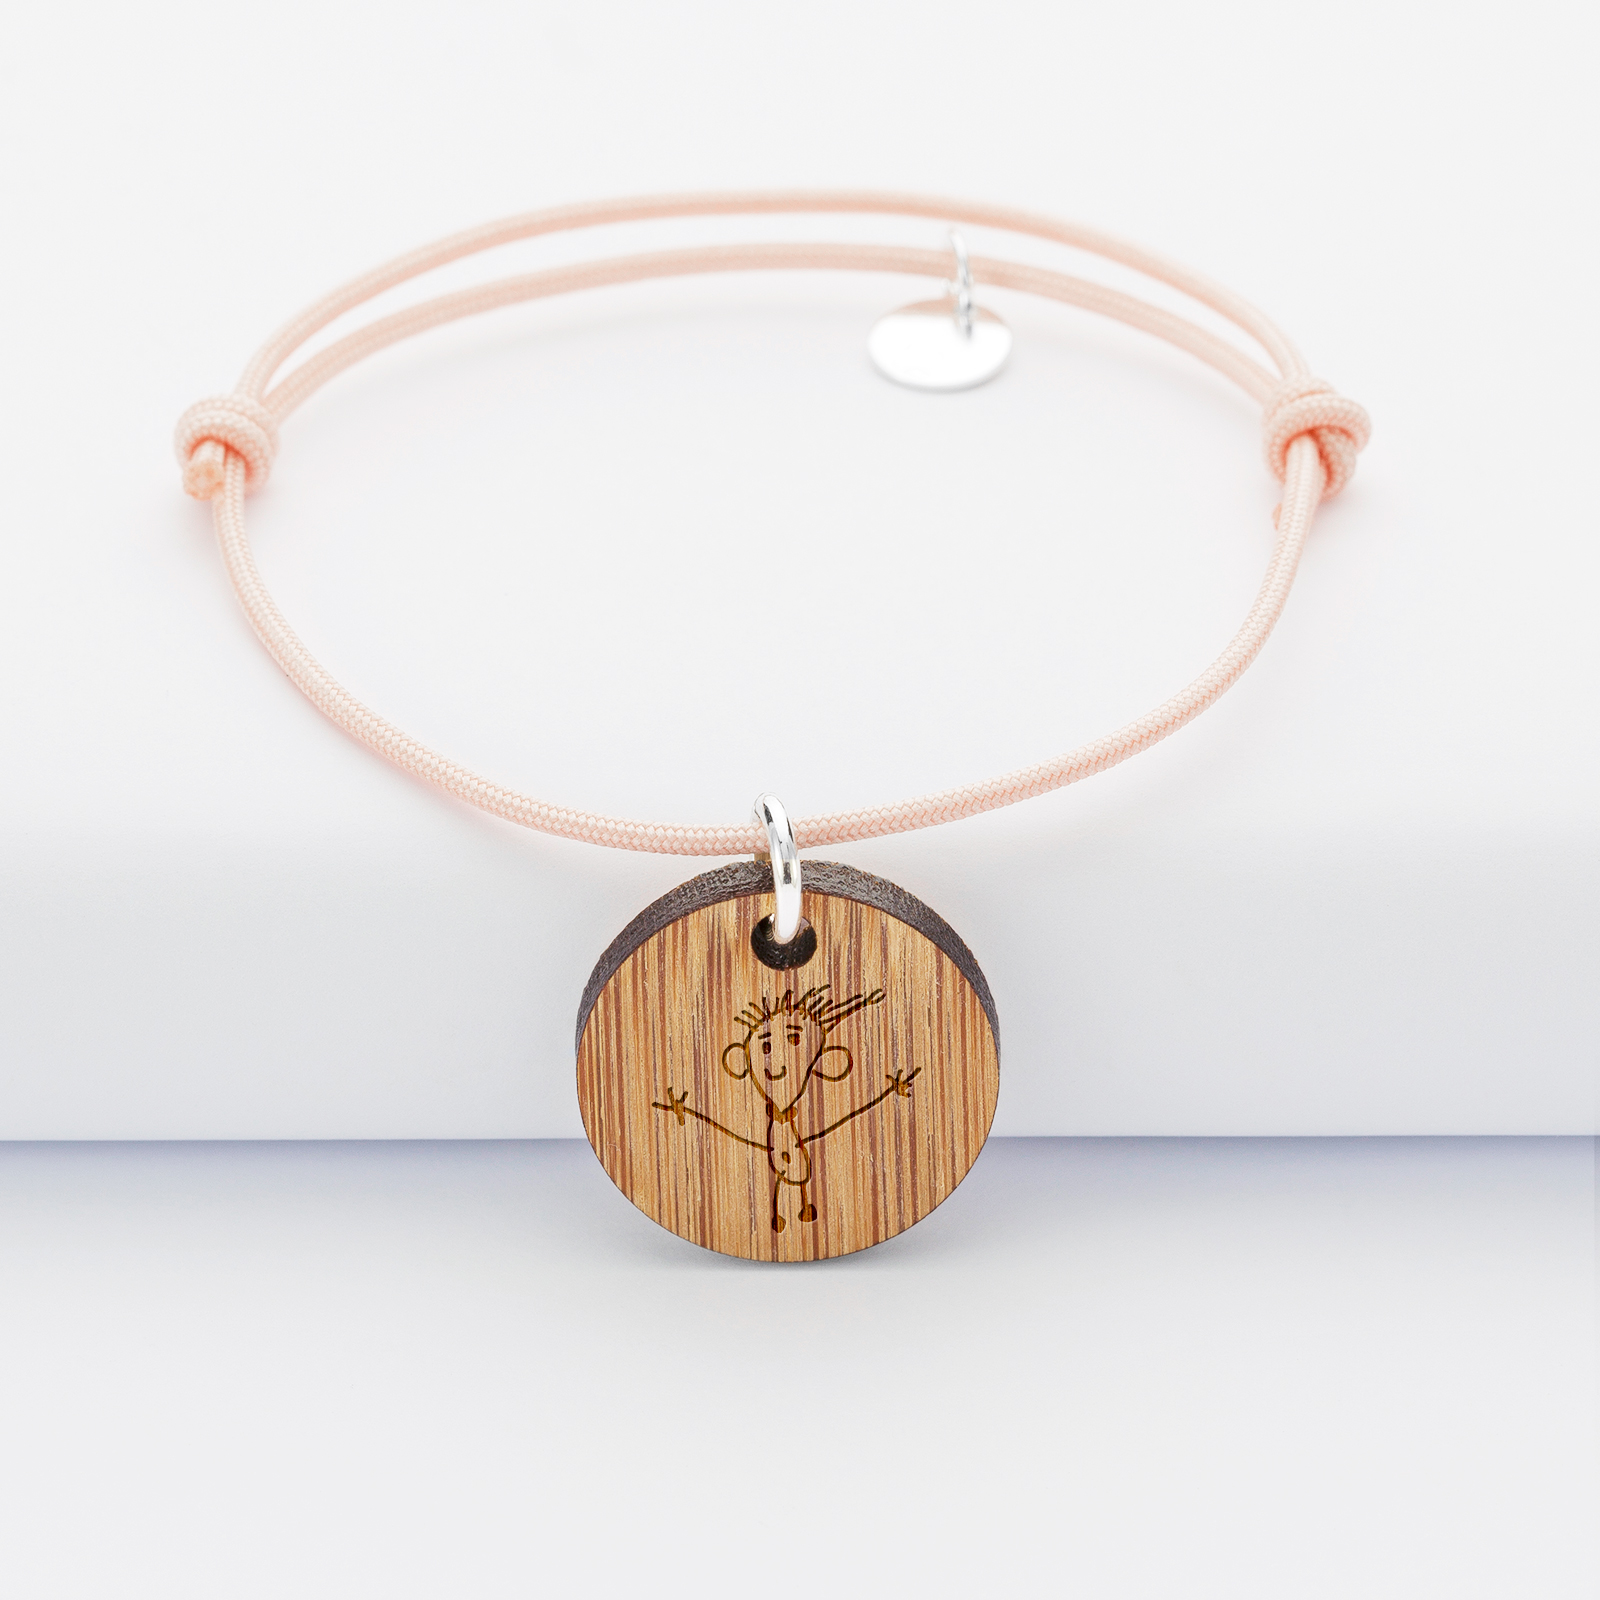 Personalised engraved wooden round target sleeper medallion bracelet 20mm - sketch